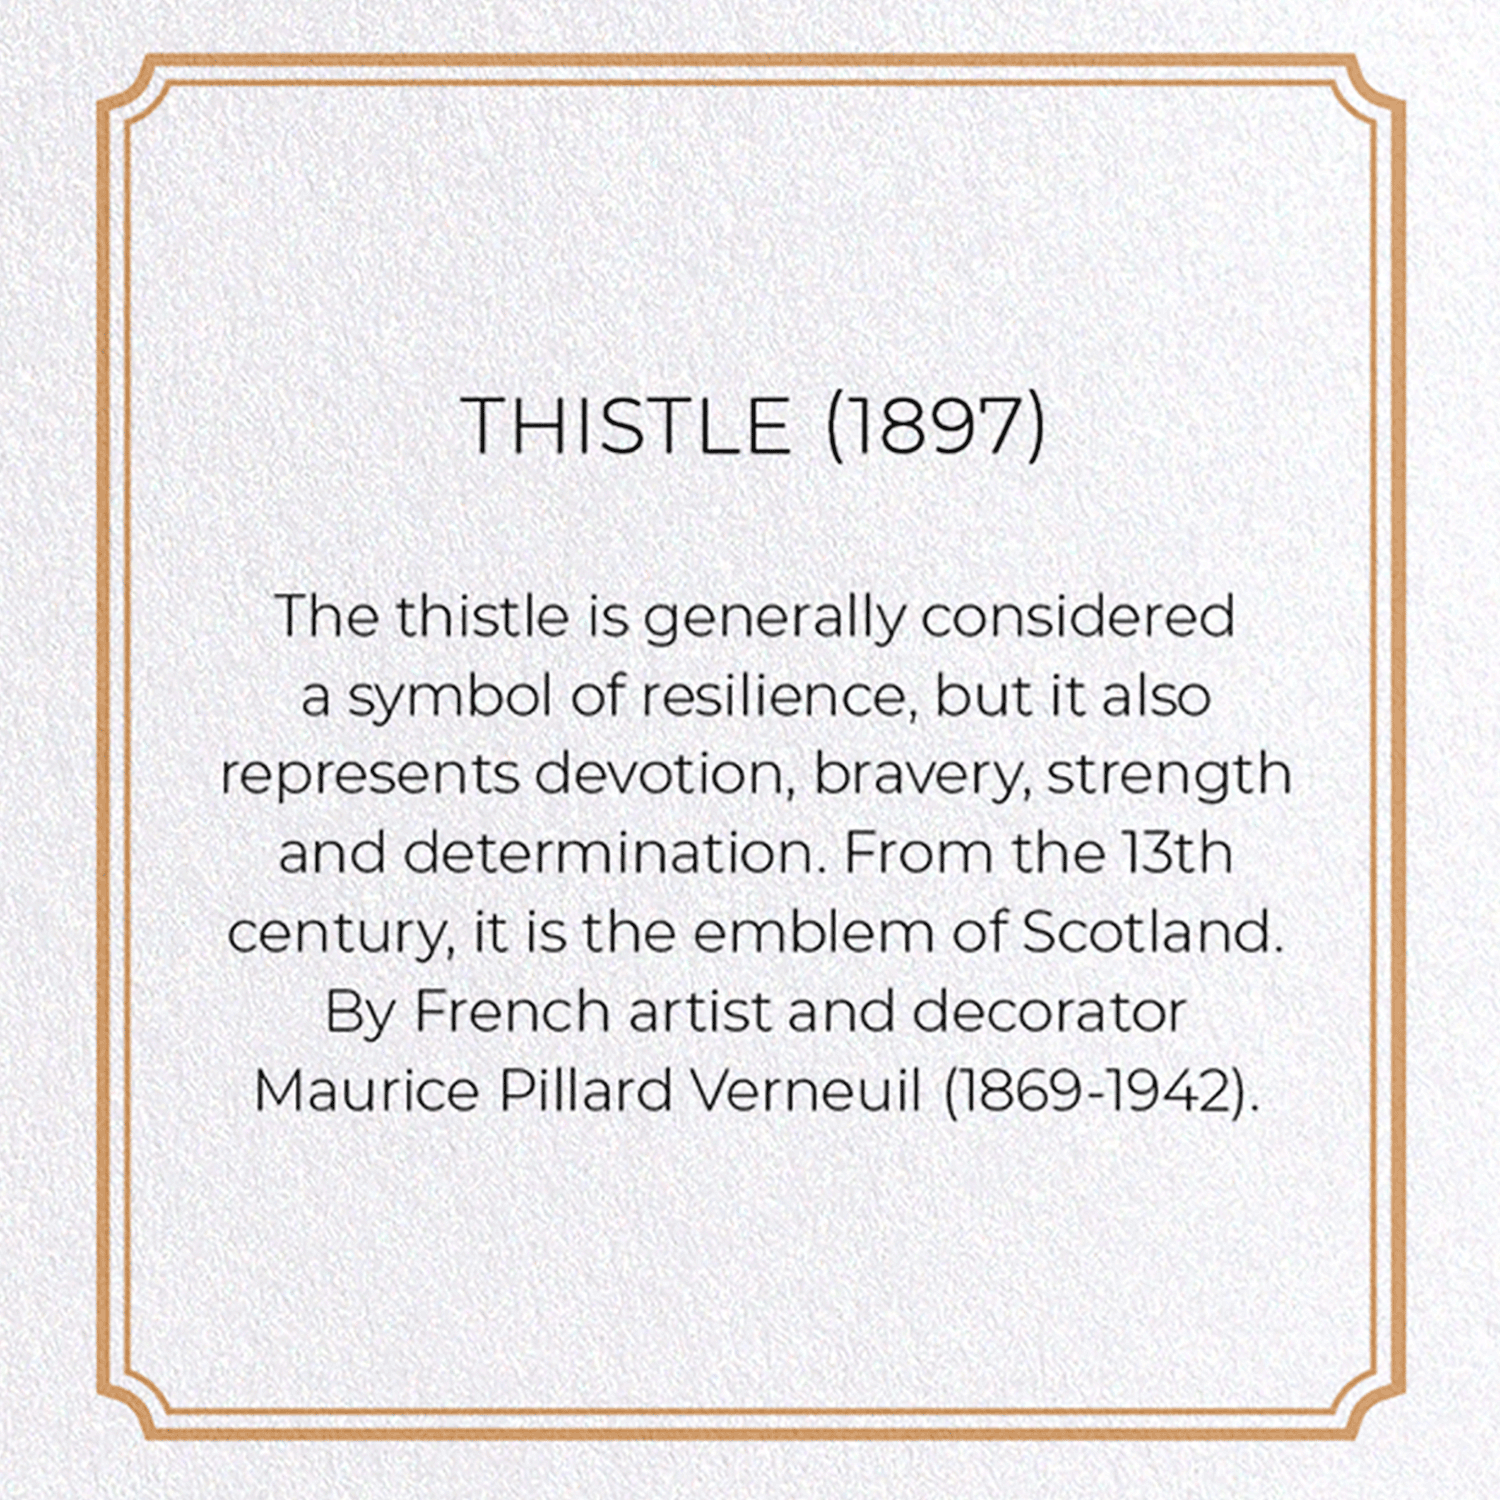 THISTLE (1897)